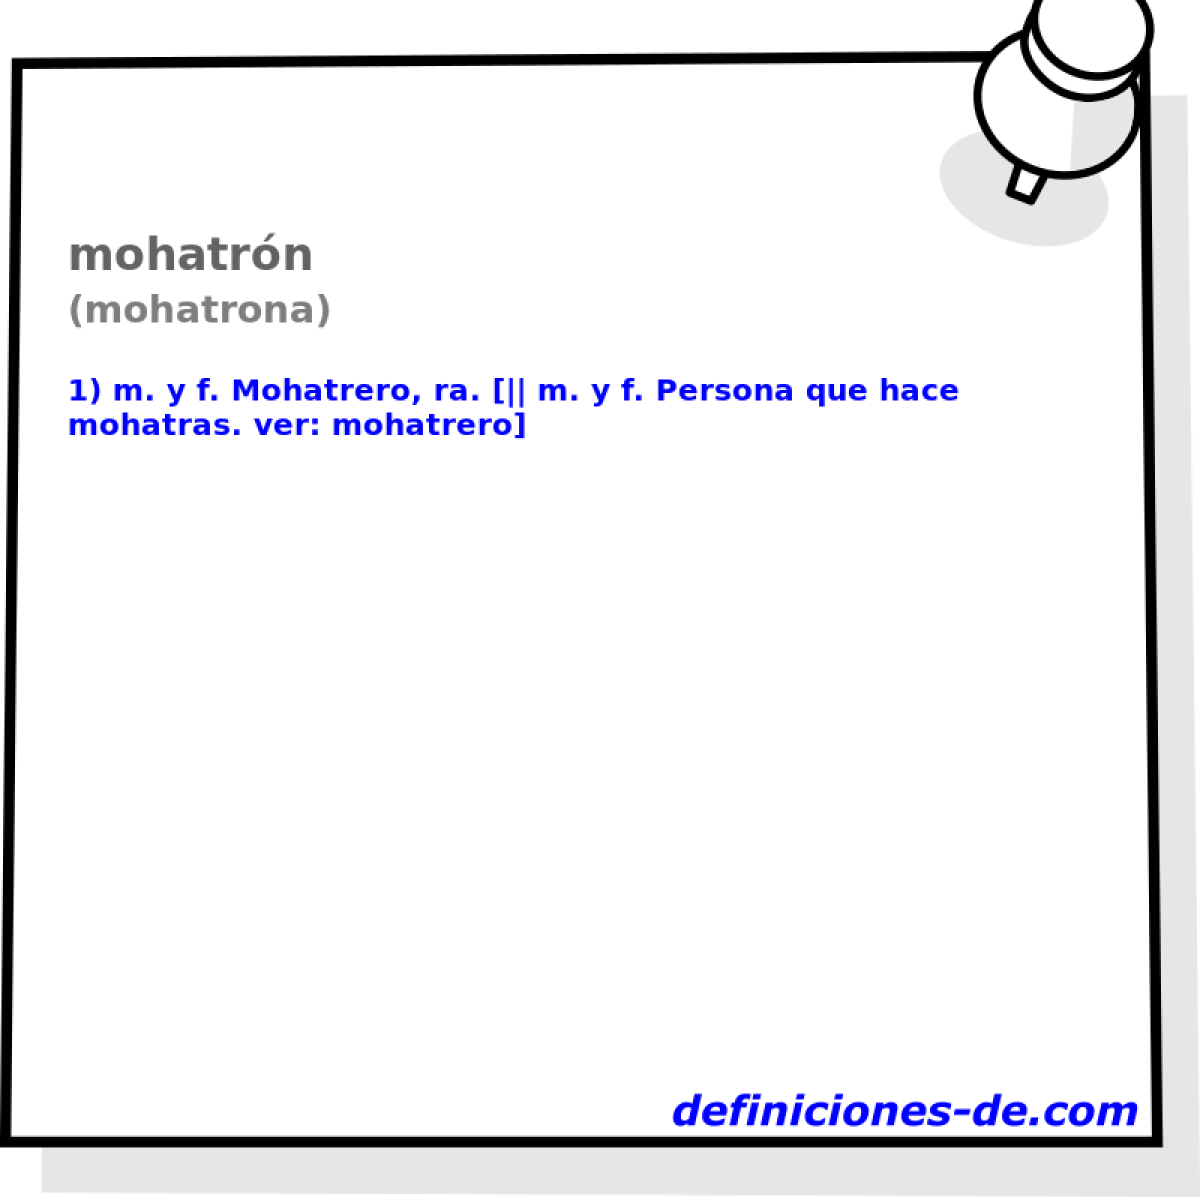 mohatrn (mohatrona)